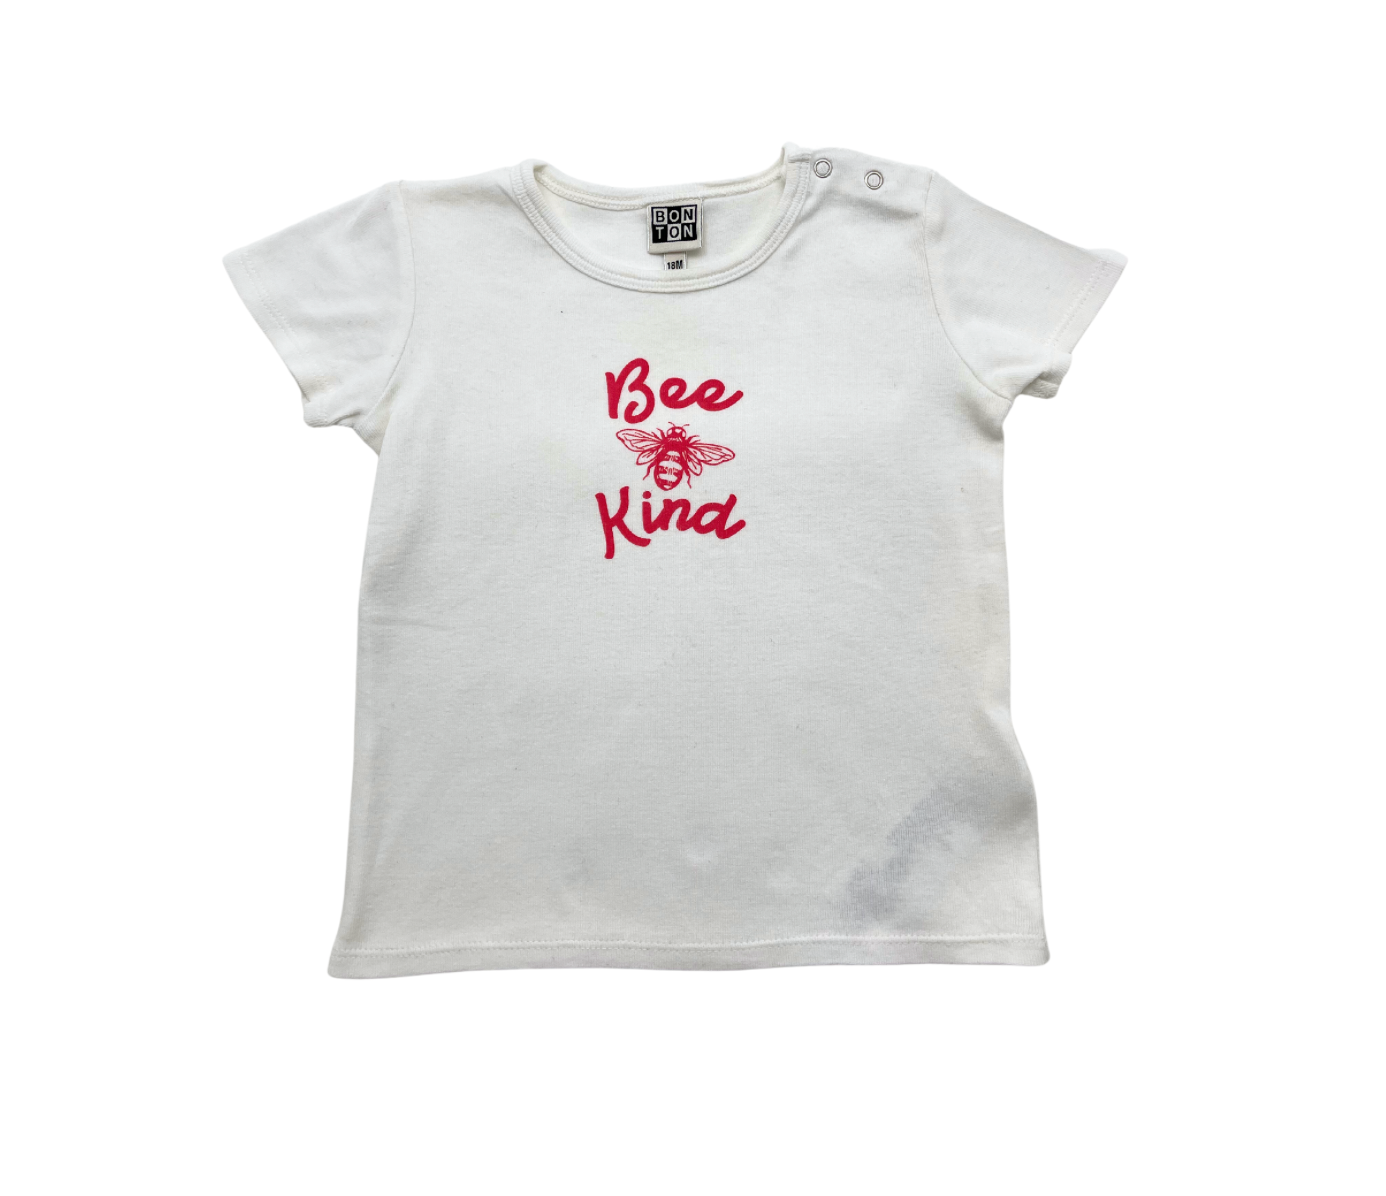 BONTON - T-shirt blanc "bee kind" - 18 mois